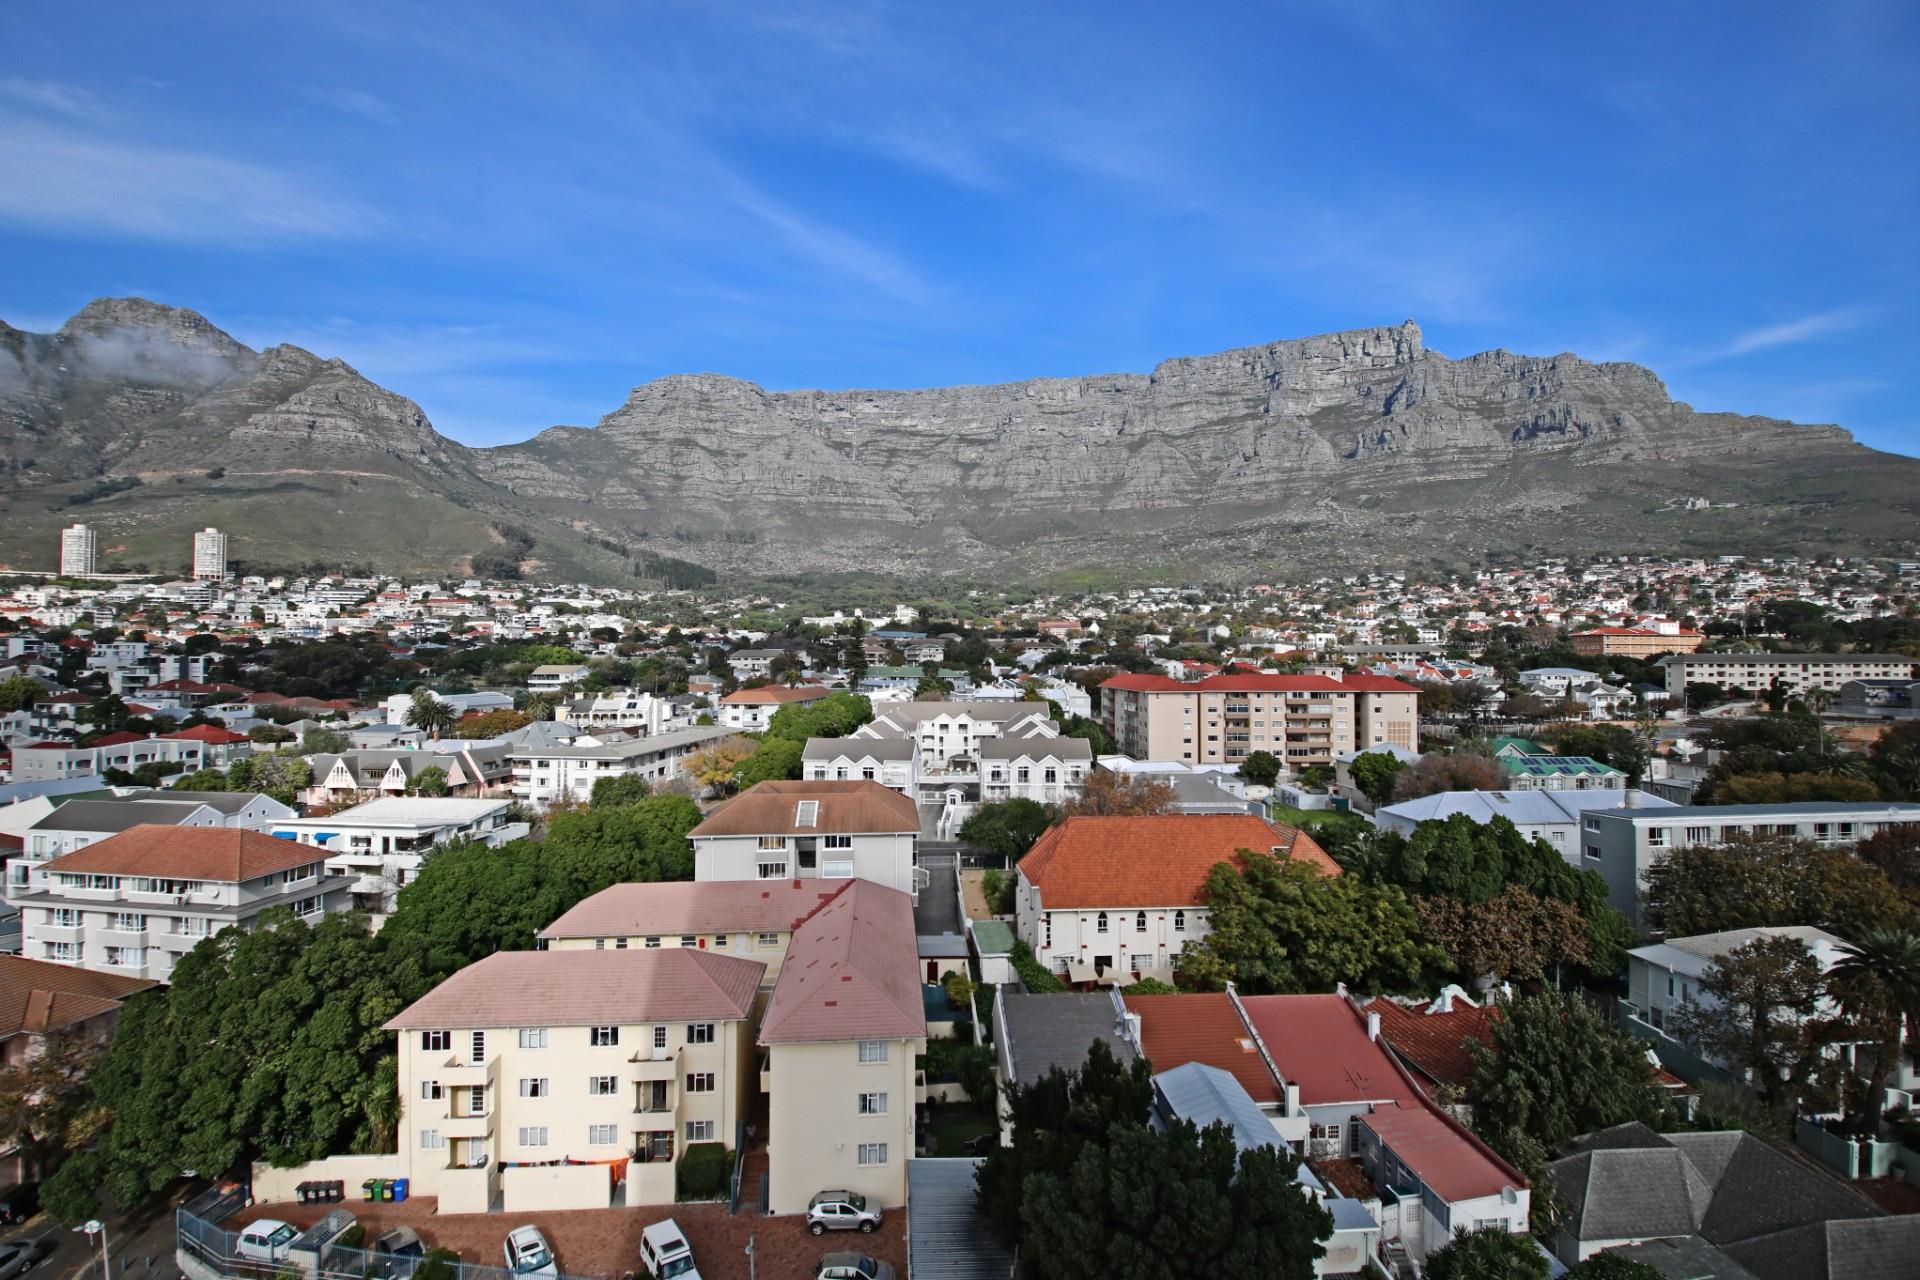 Studio to Rent in Oranjezicht | Cape Town - South Africa | IA0003499151 ...